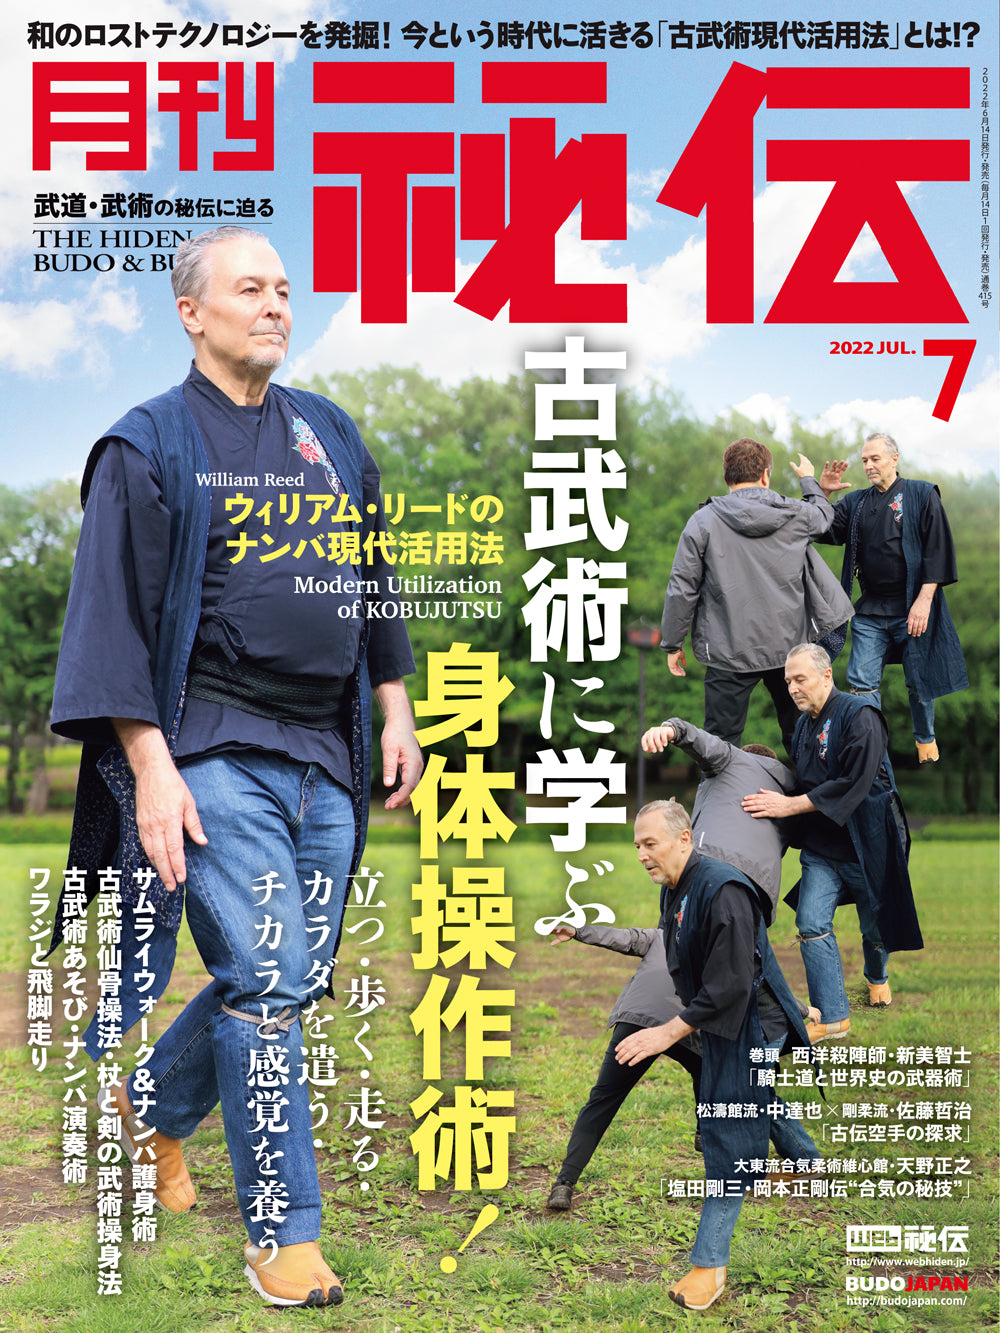 Hiden Budo & Bujutsu Magazine July 2022